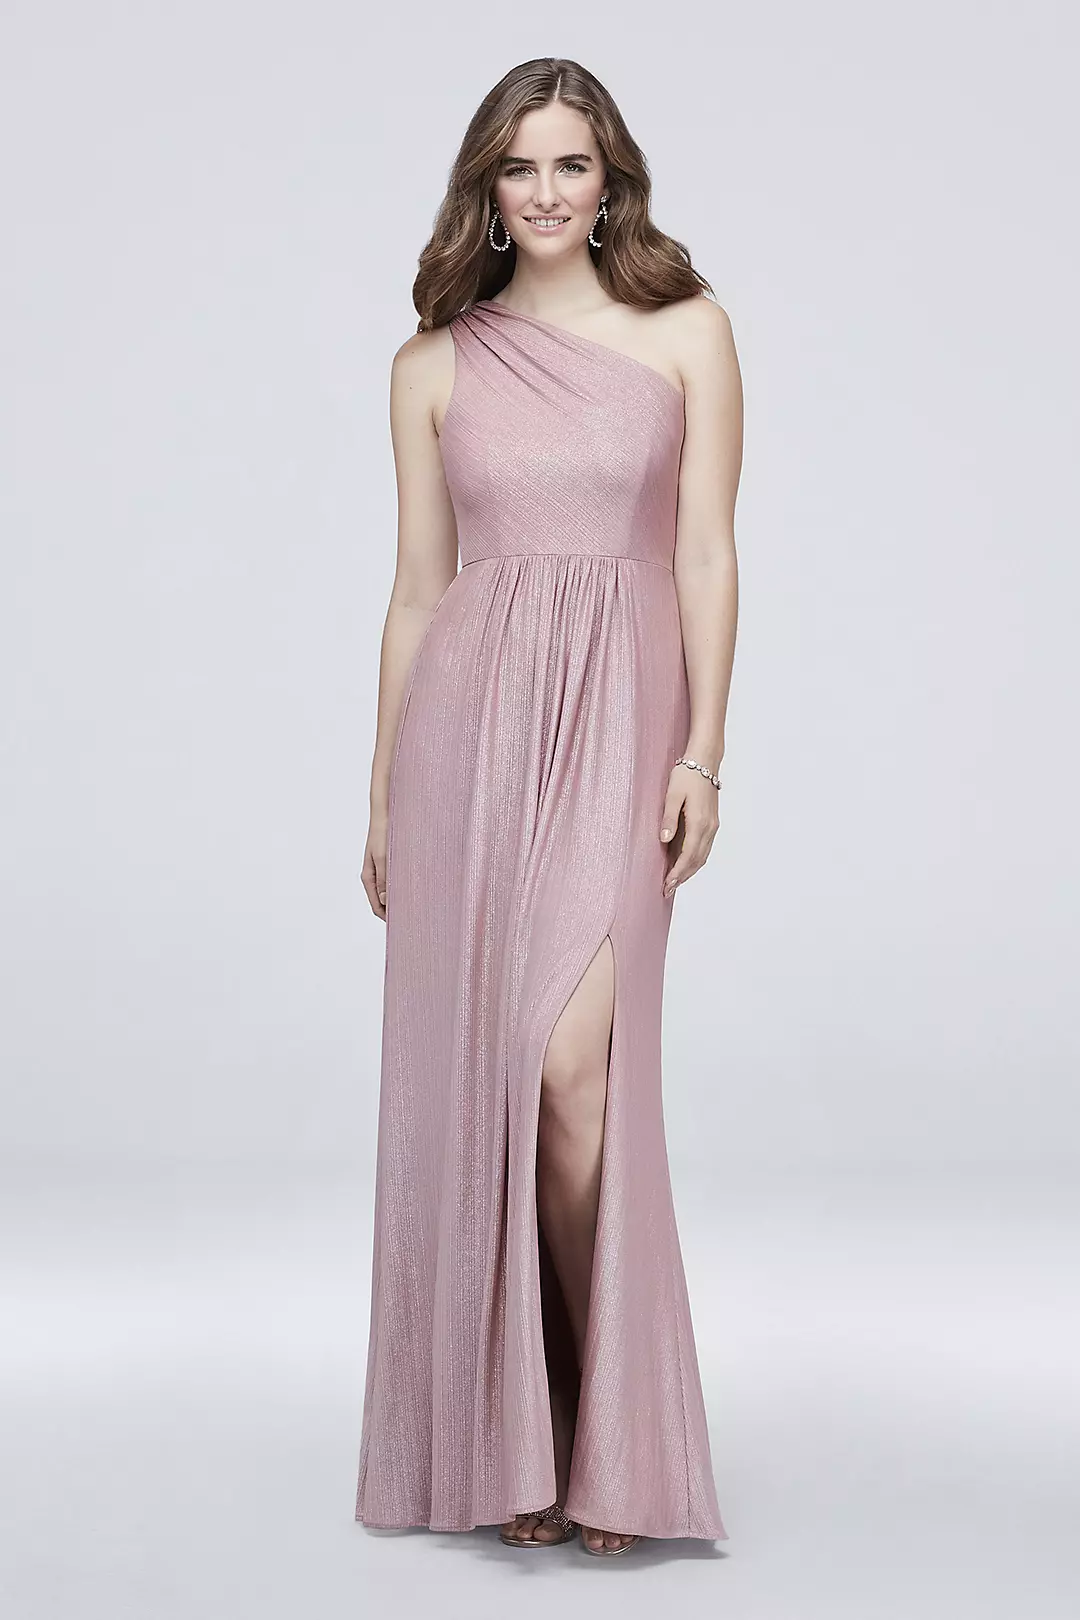 One-Shoulder Textured Foiled Jersey A-Line Dress Image